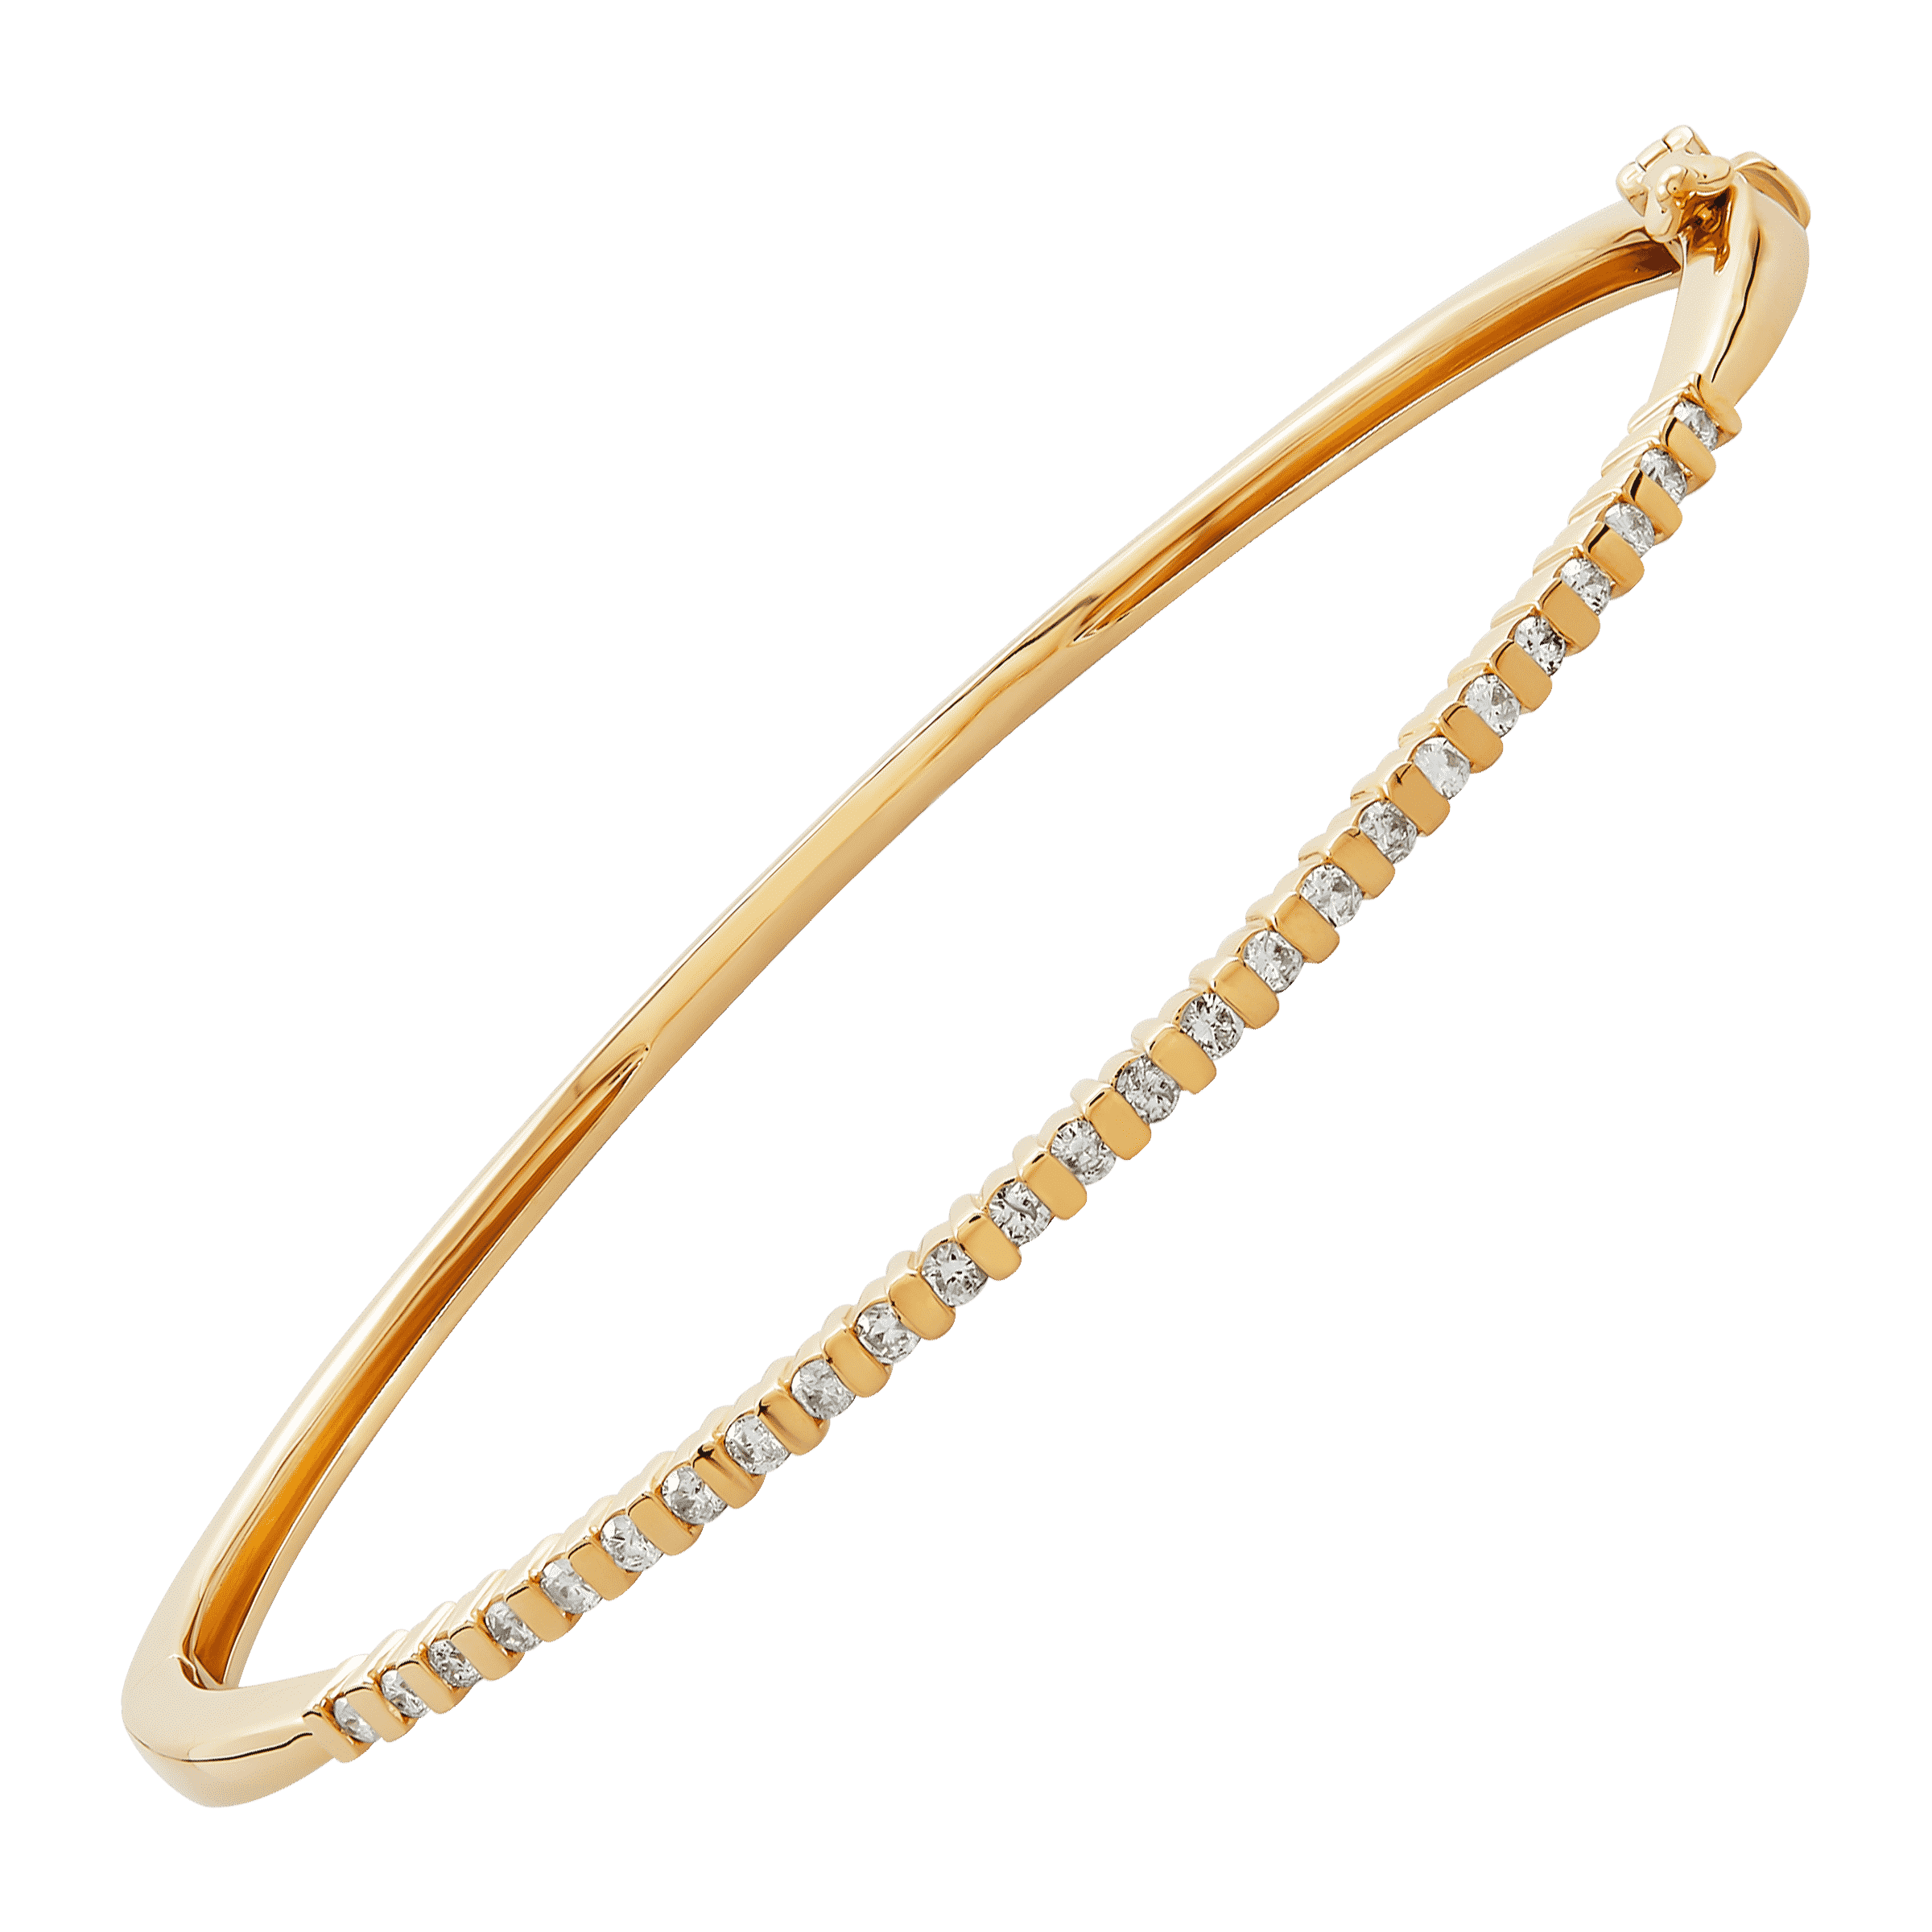 Welry 1/2 cttw Diamond Bangle Bracelet in 10K Yellow Gold, 6.93